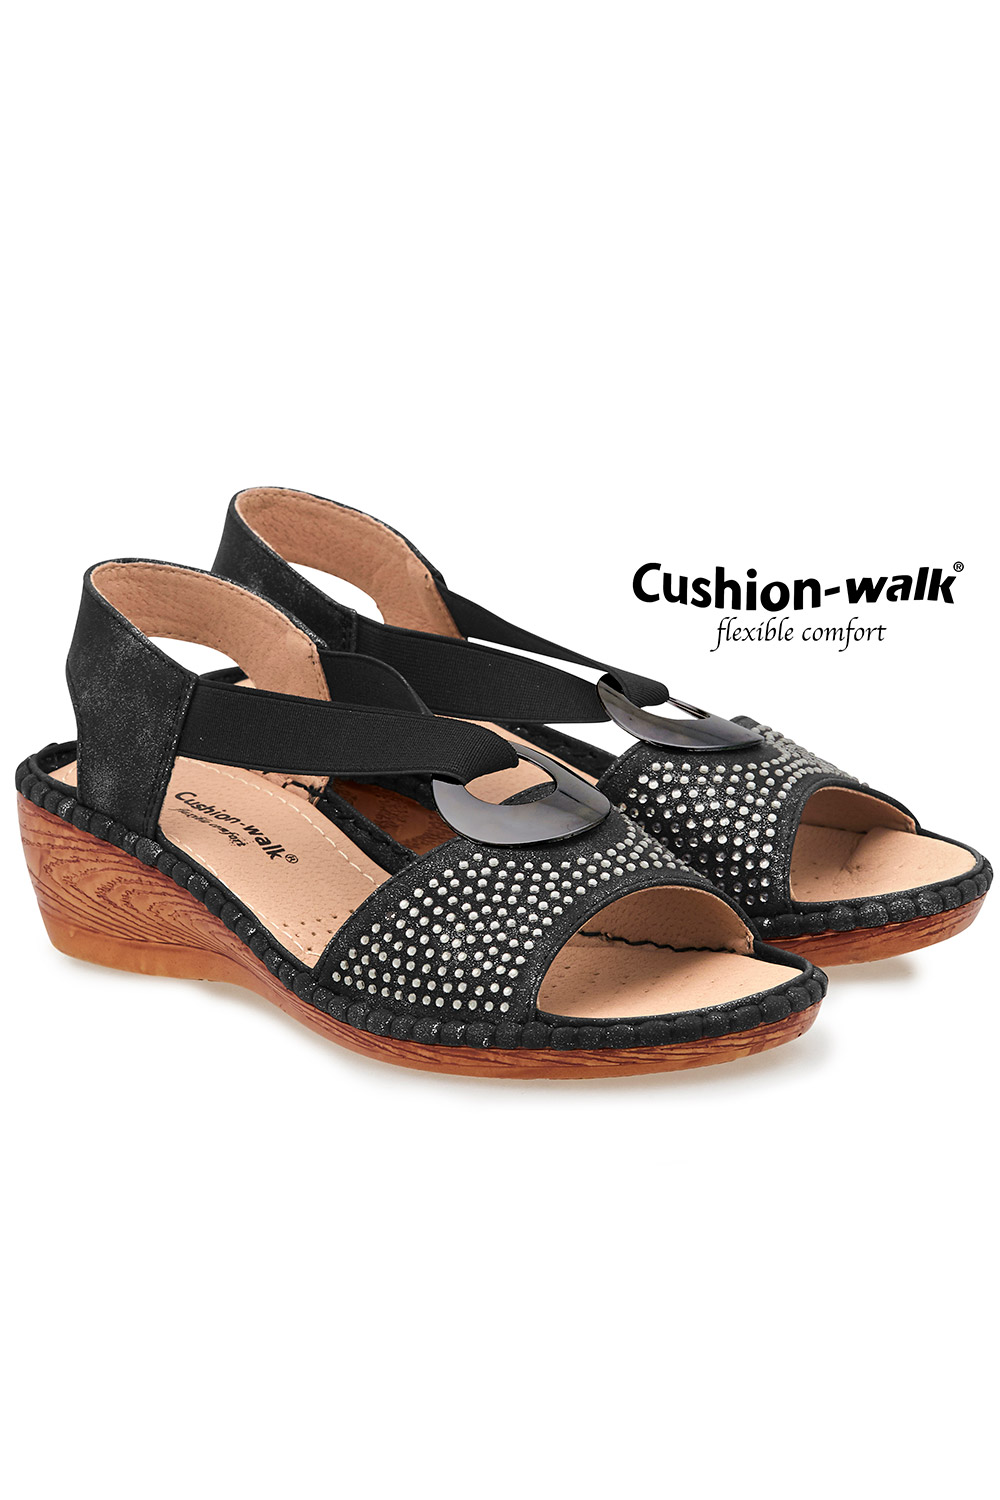 cushion walk sandals uk